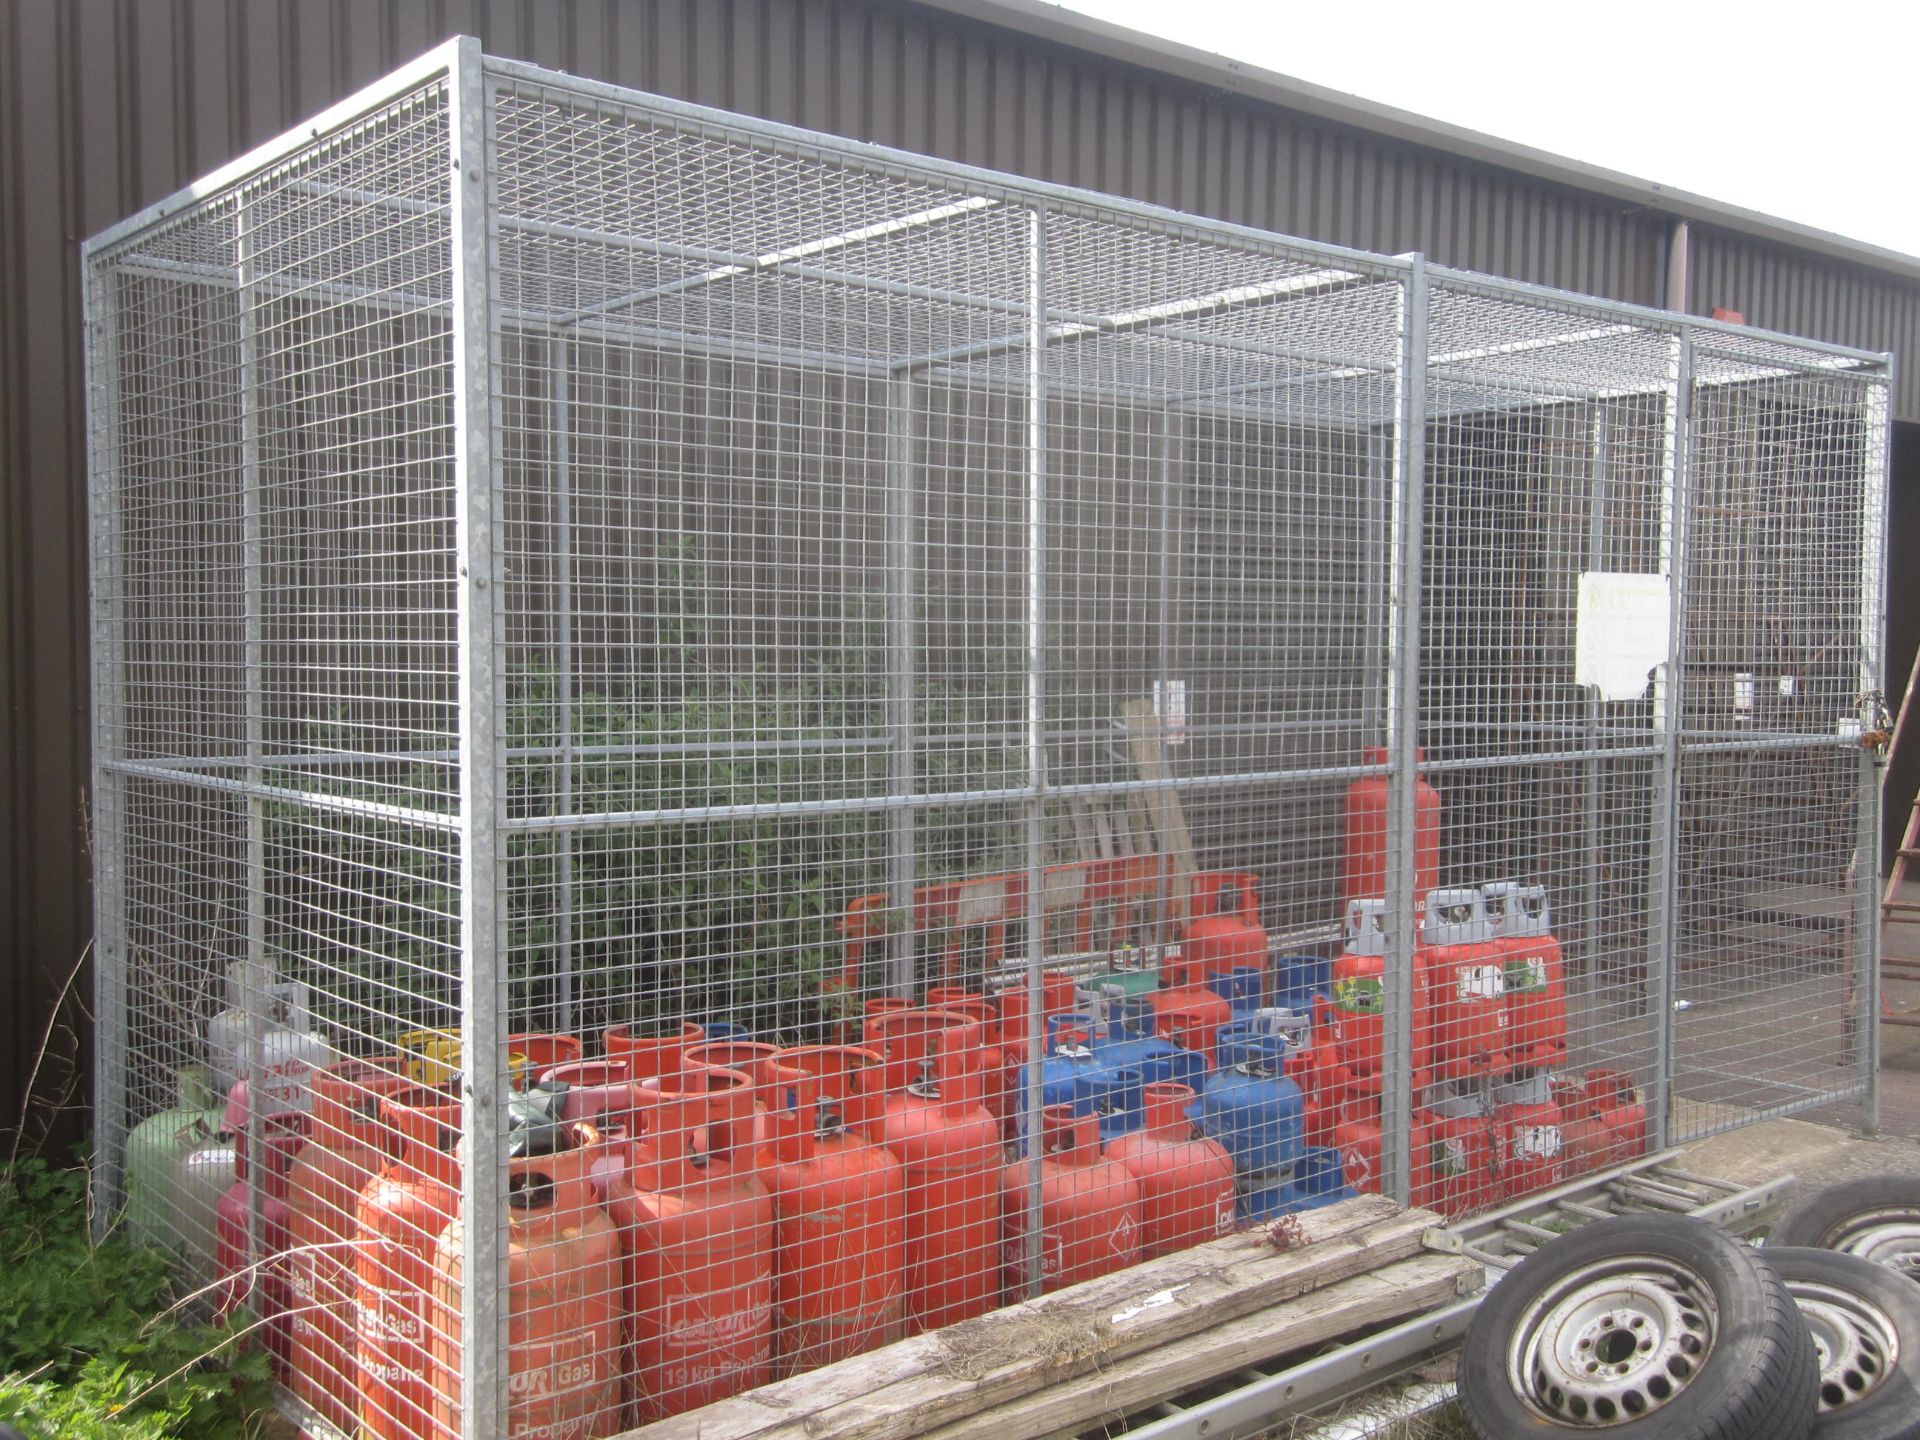 Galvanised steel calor gas bottle netted storage enclosure, panel construction, 16ft x 8ft x 8ft